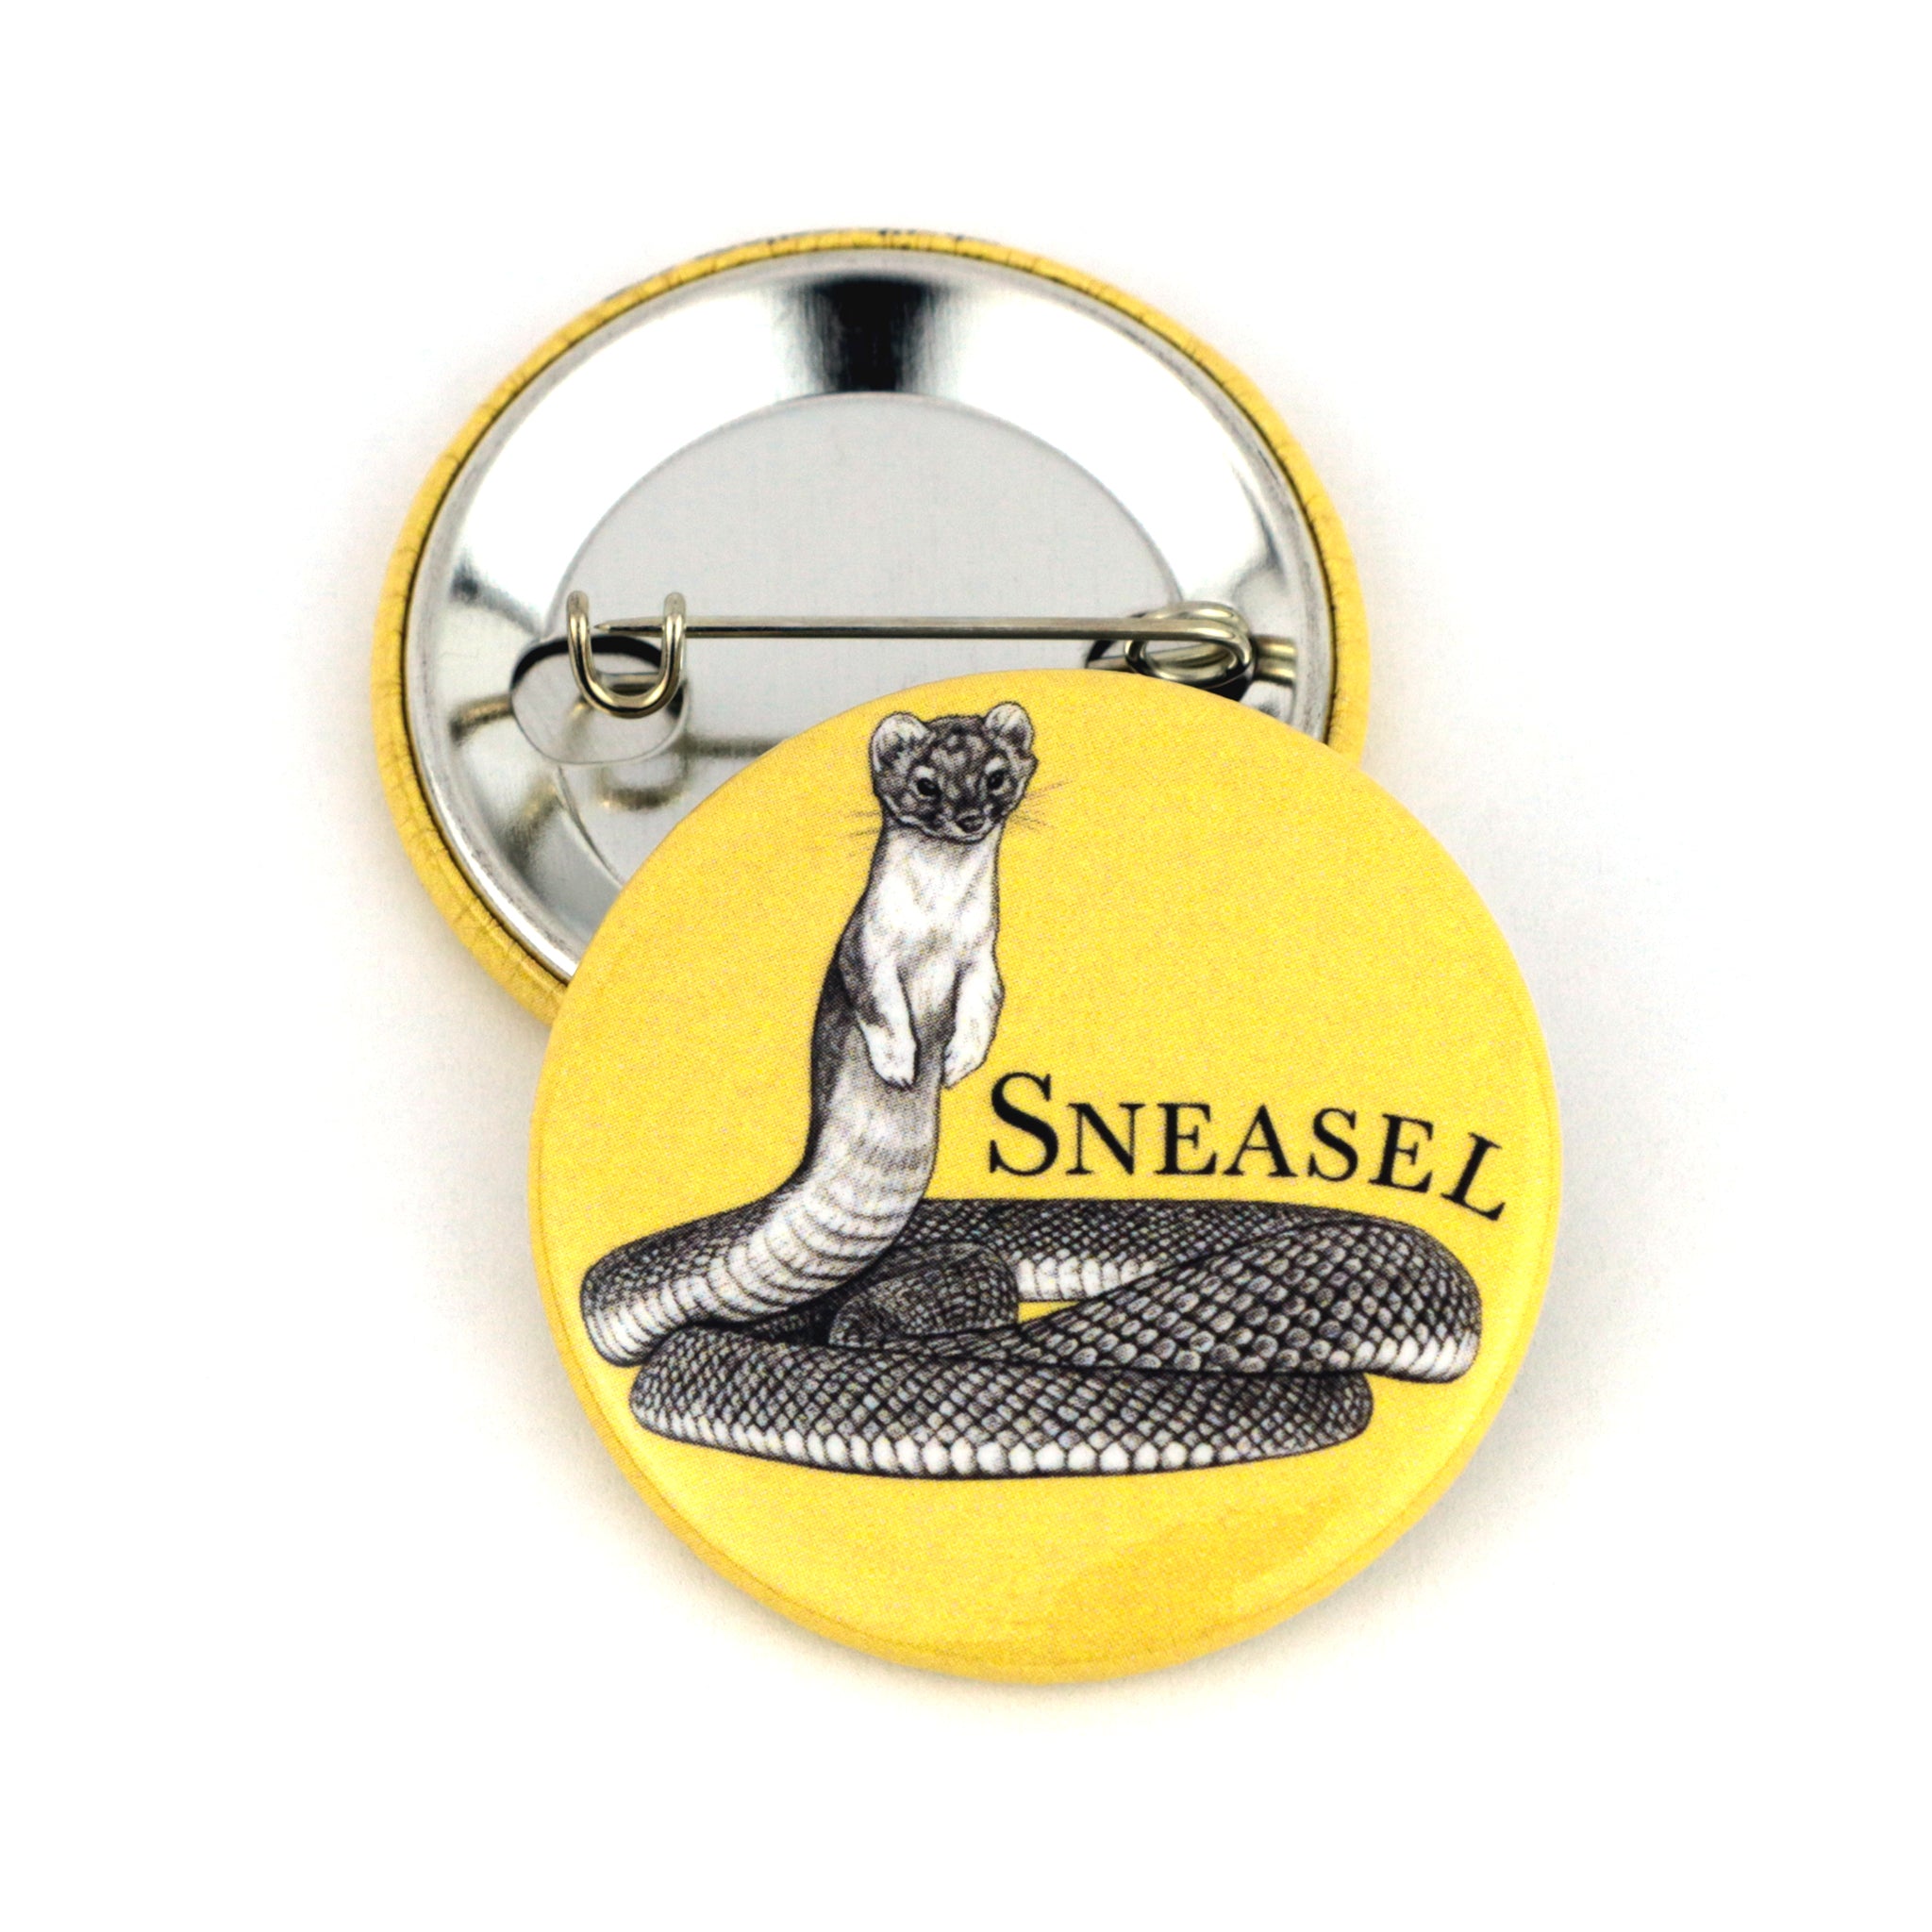 Sneasel | Snake + Weasel Hybrid Animal | 1.5" Pinback Button